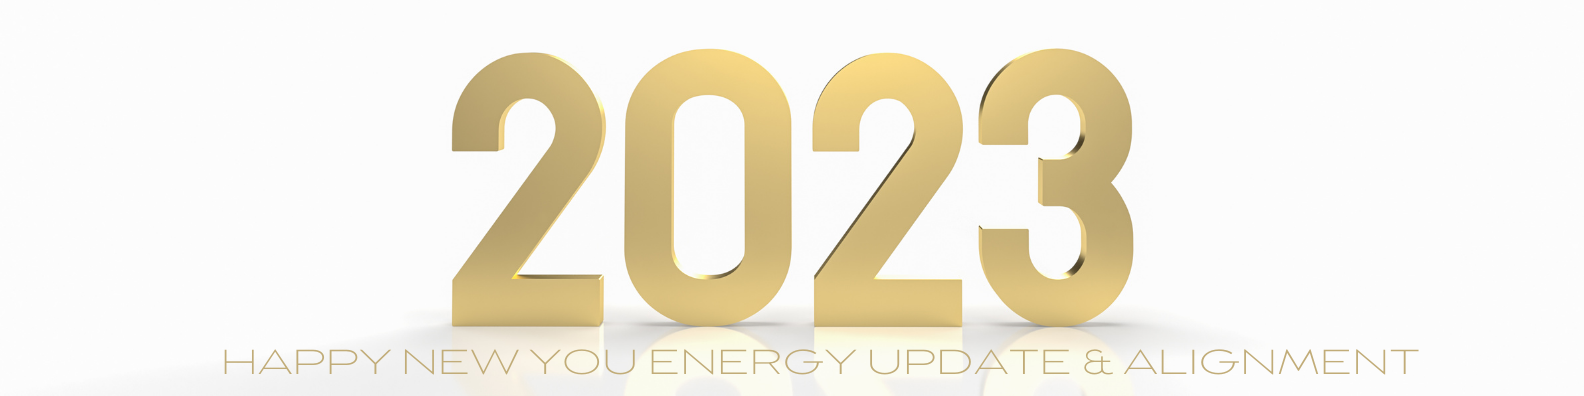 Energy Update & Alignment